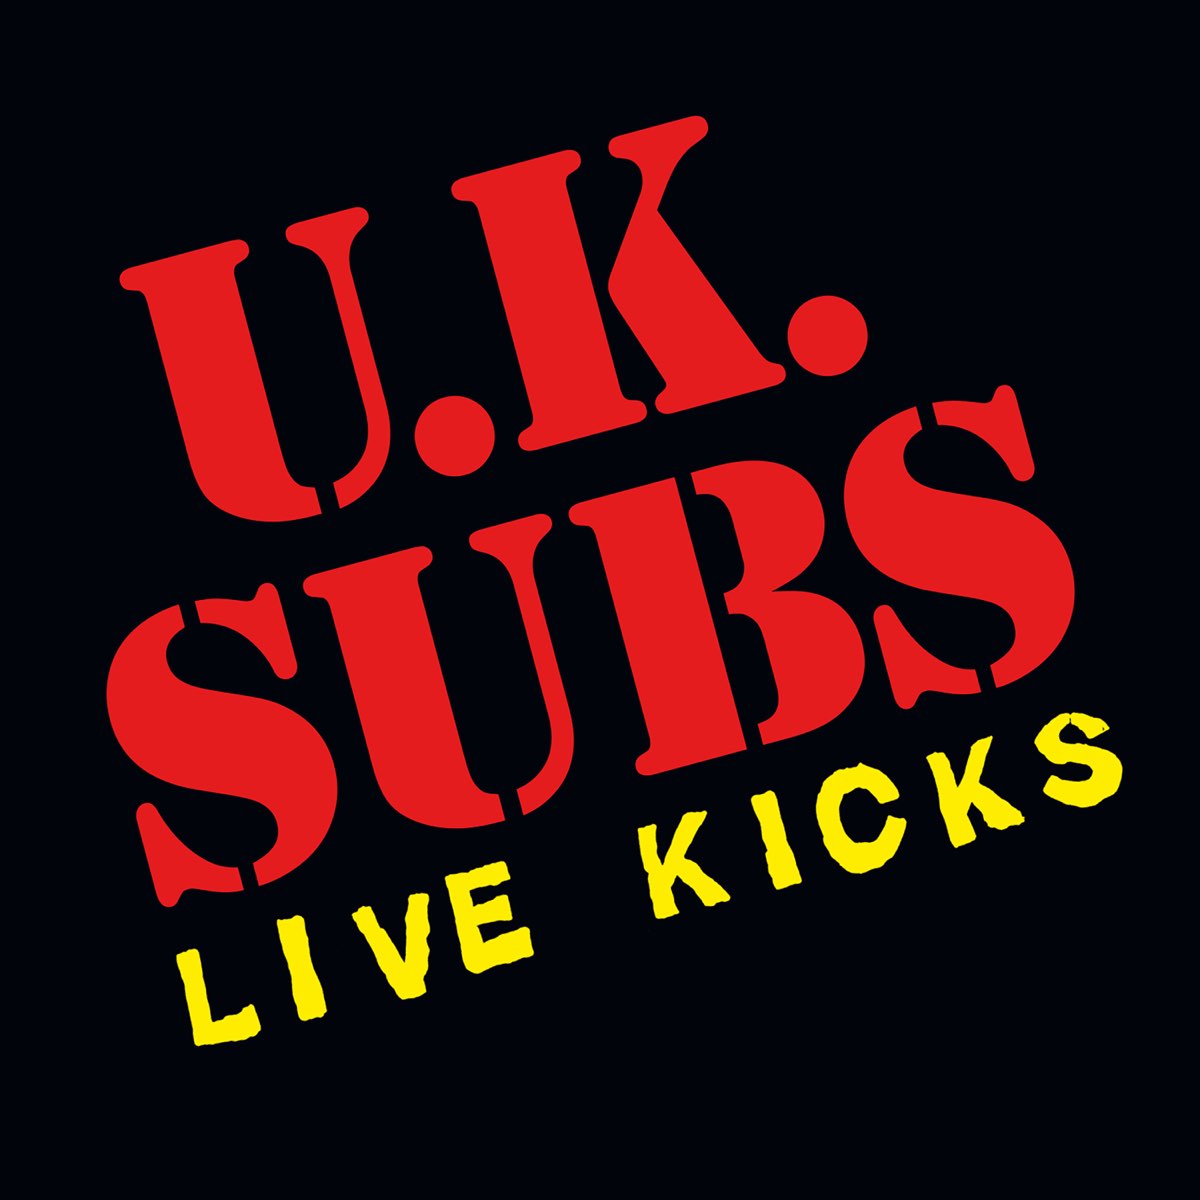 Kick live streaming. Uk subs. Uk subs группа. U.K. subs. U.K. subs трафарет.